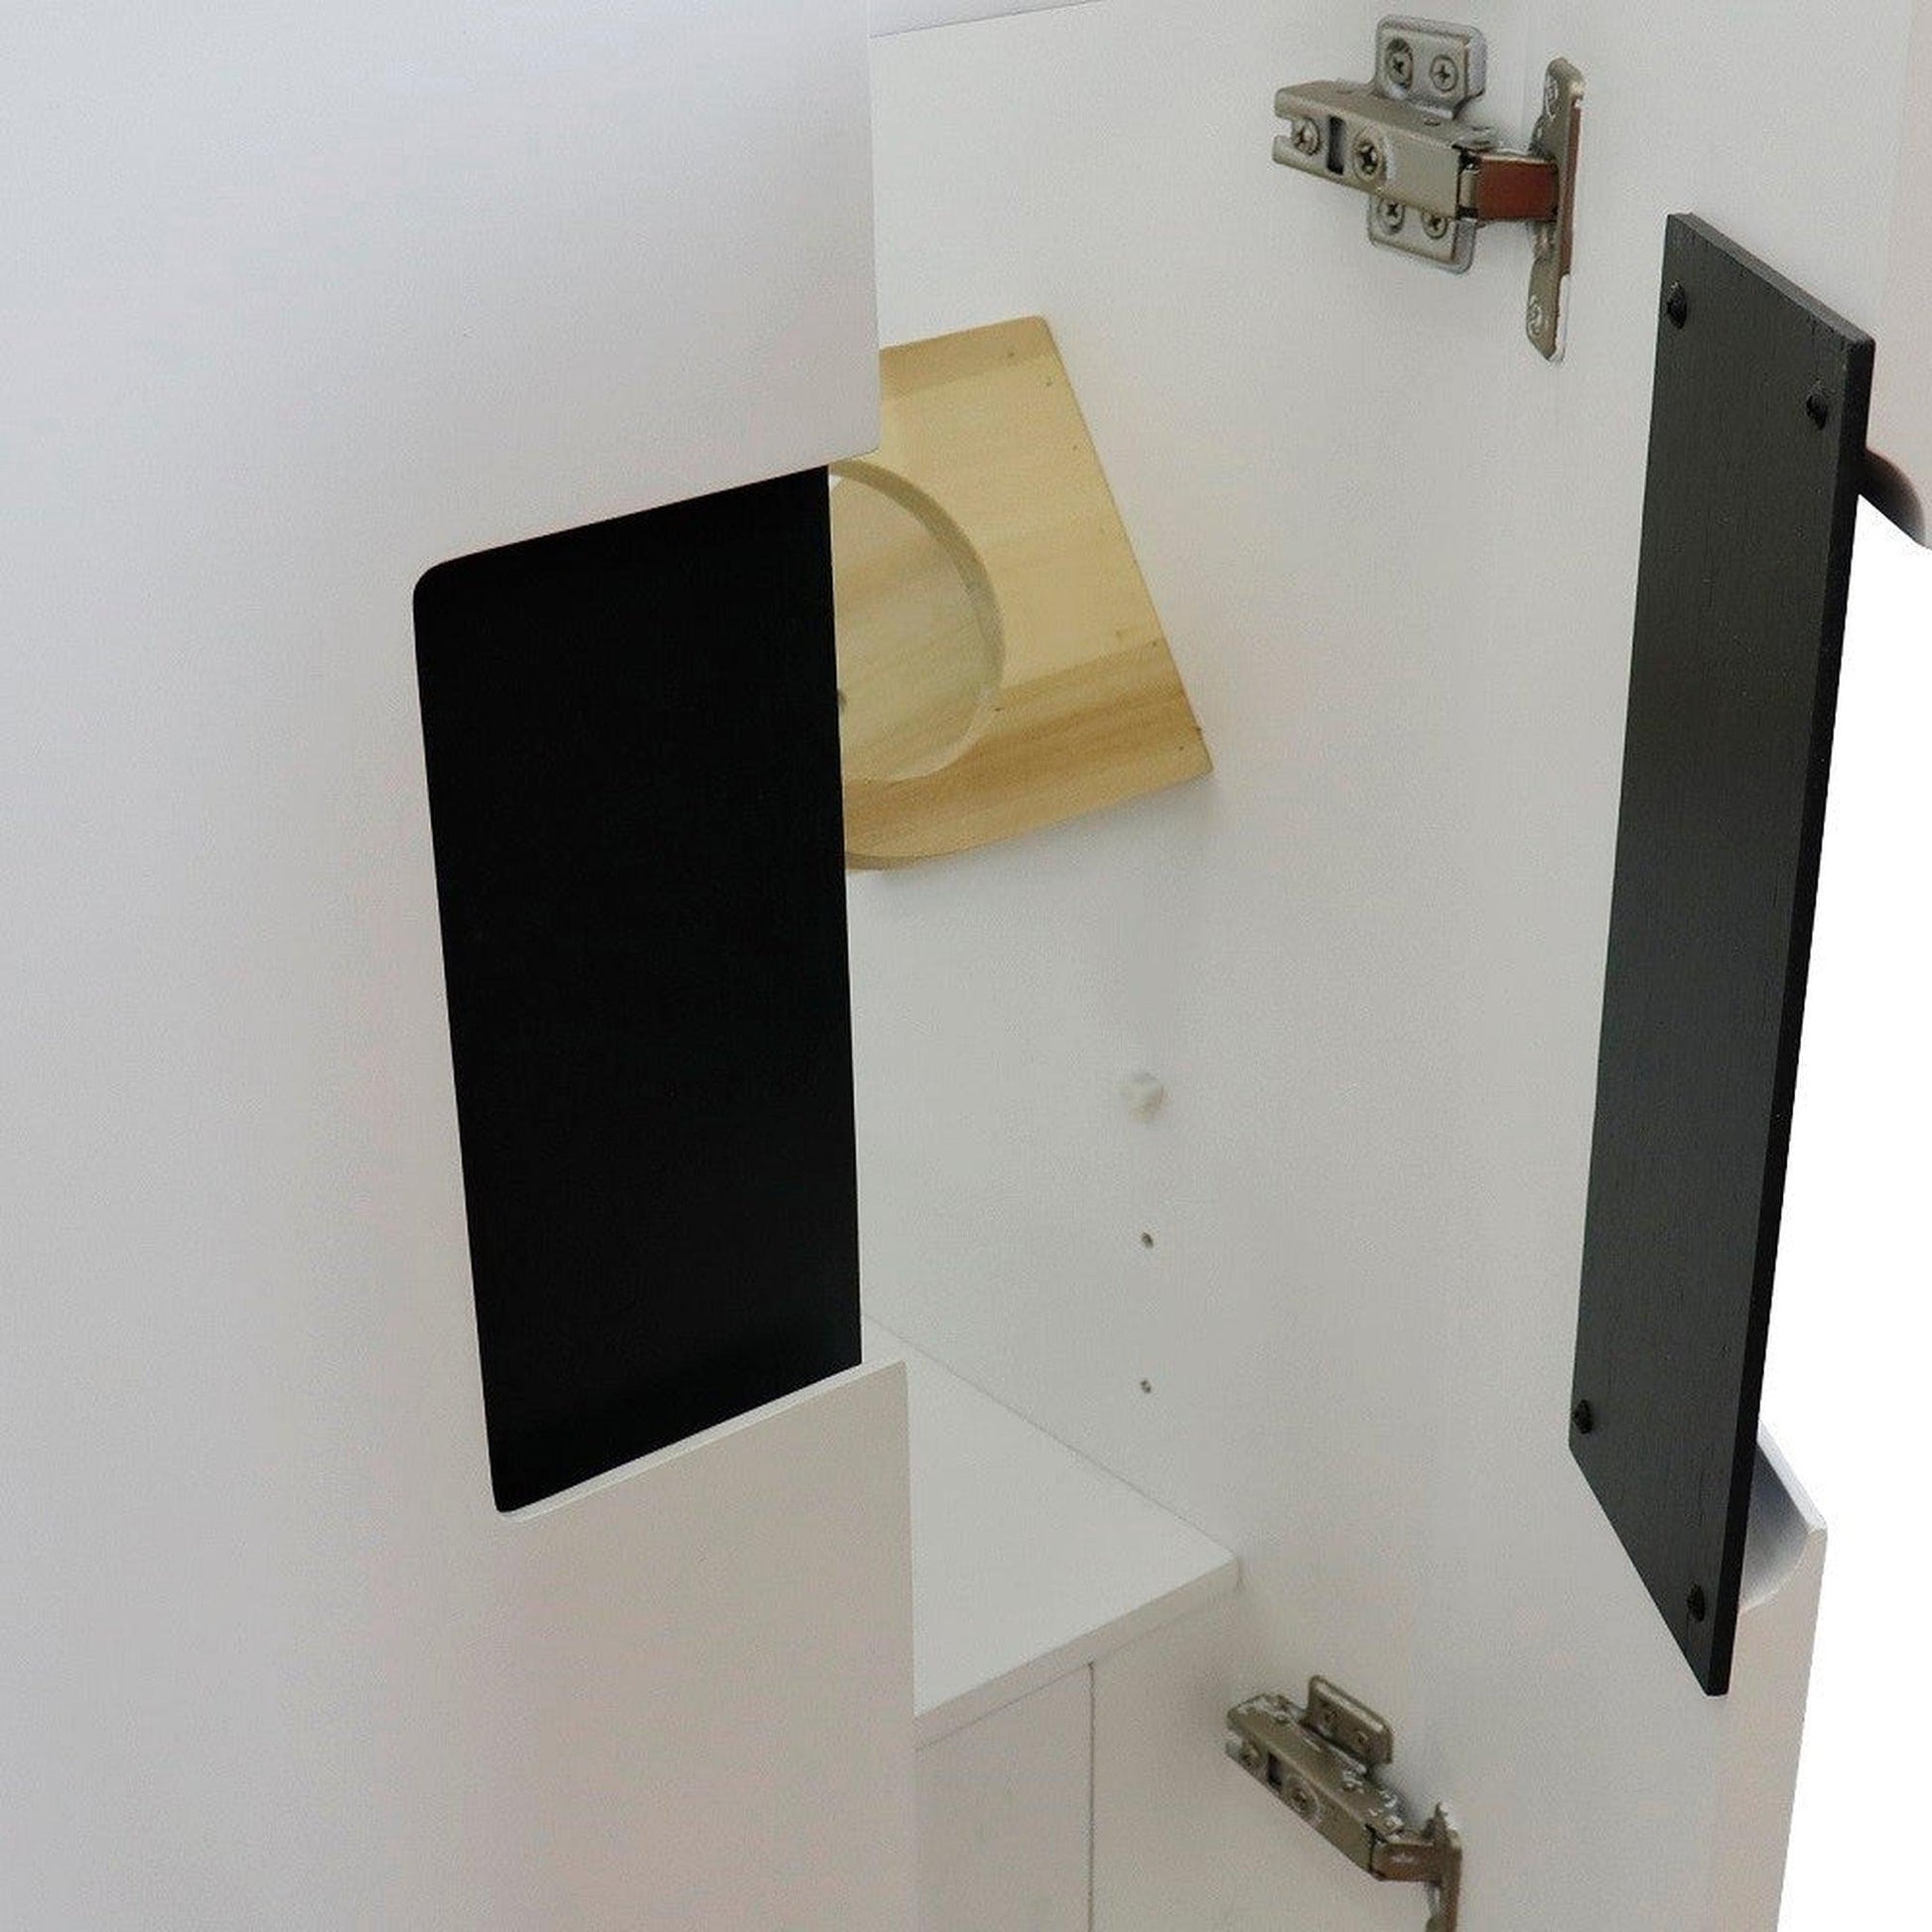 Bellaterra Home Kolb 25" 2-Door 1-Drawer White Freestanding Vanity Set With Ceramic Vessel Sink and White Quartz Top